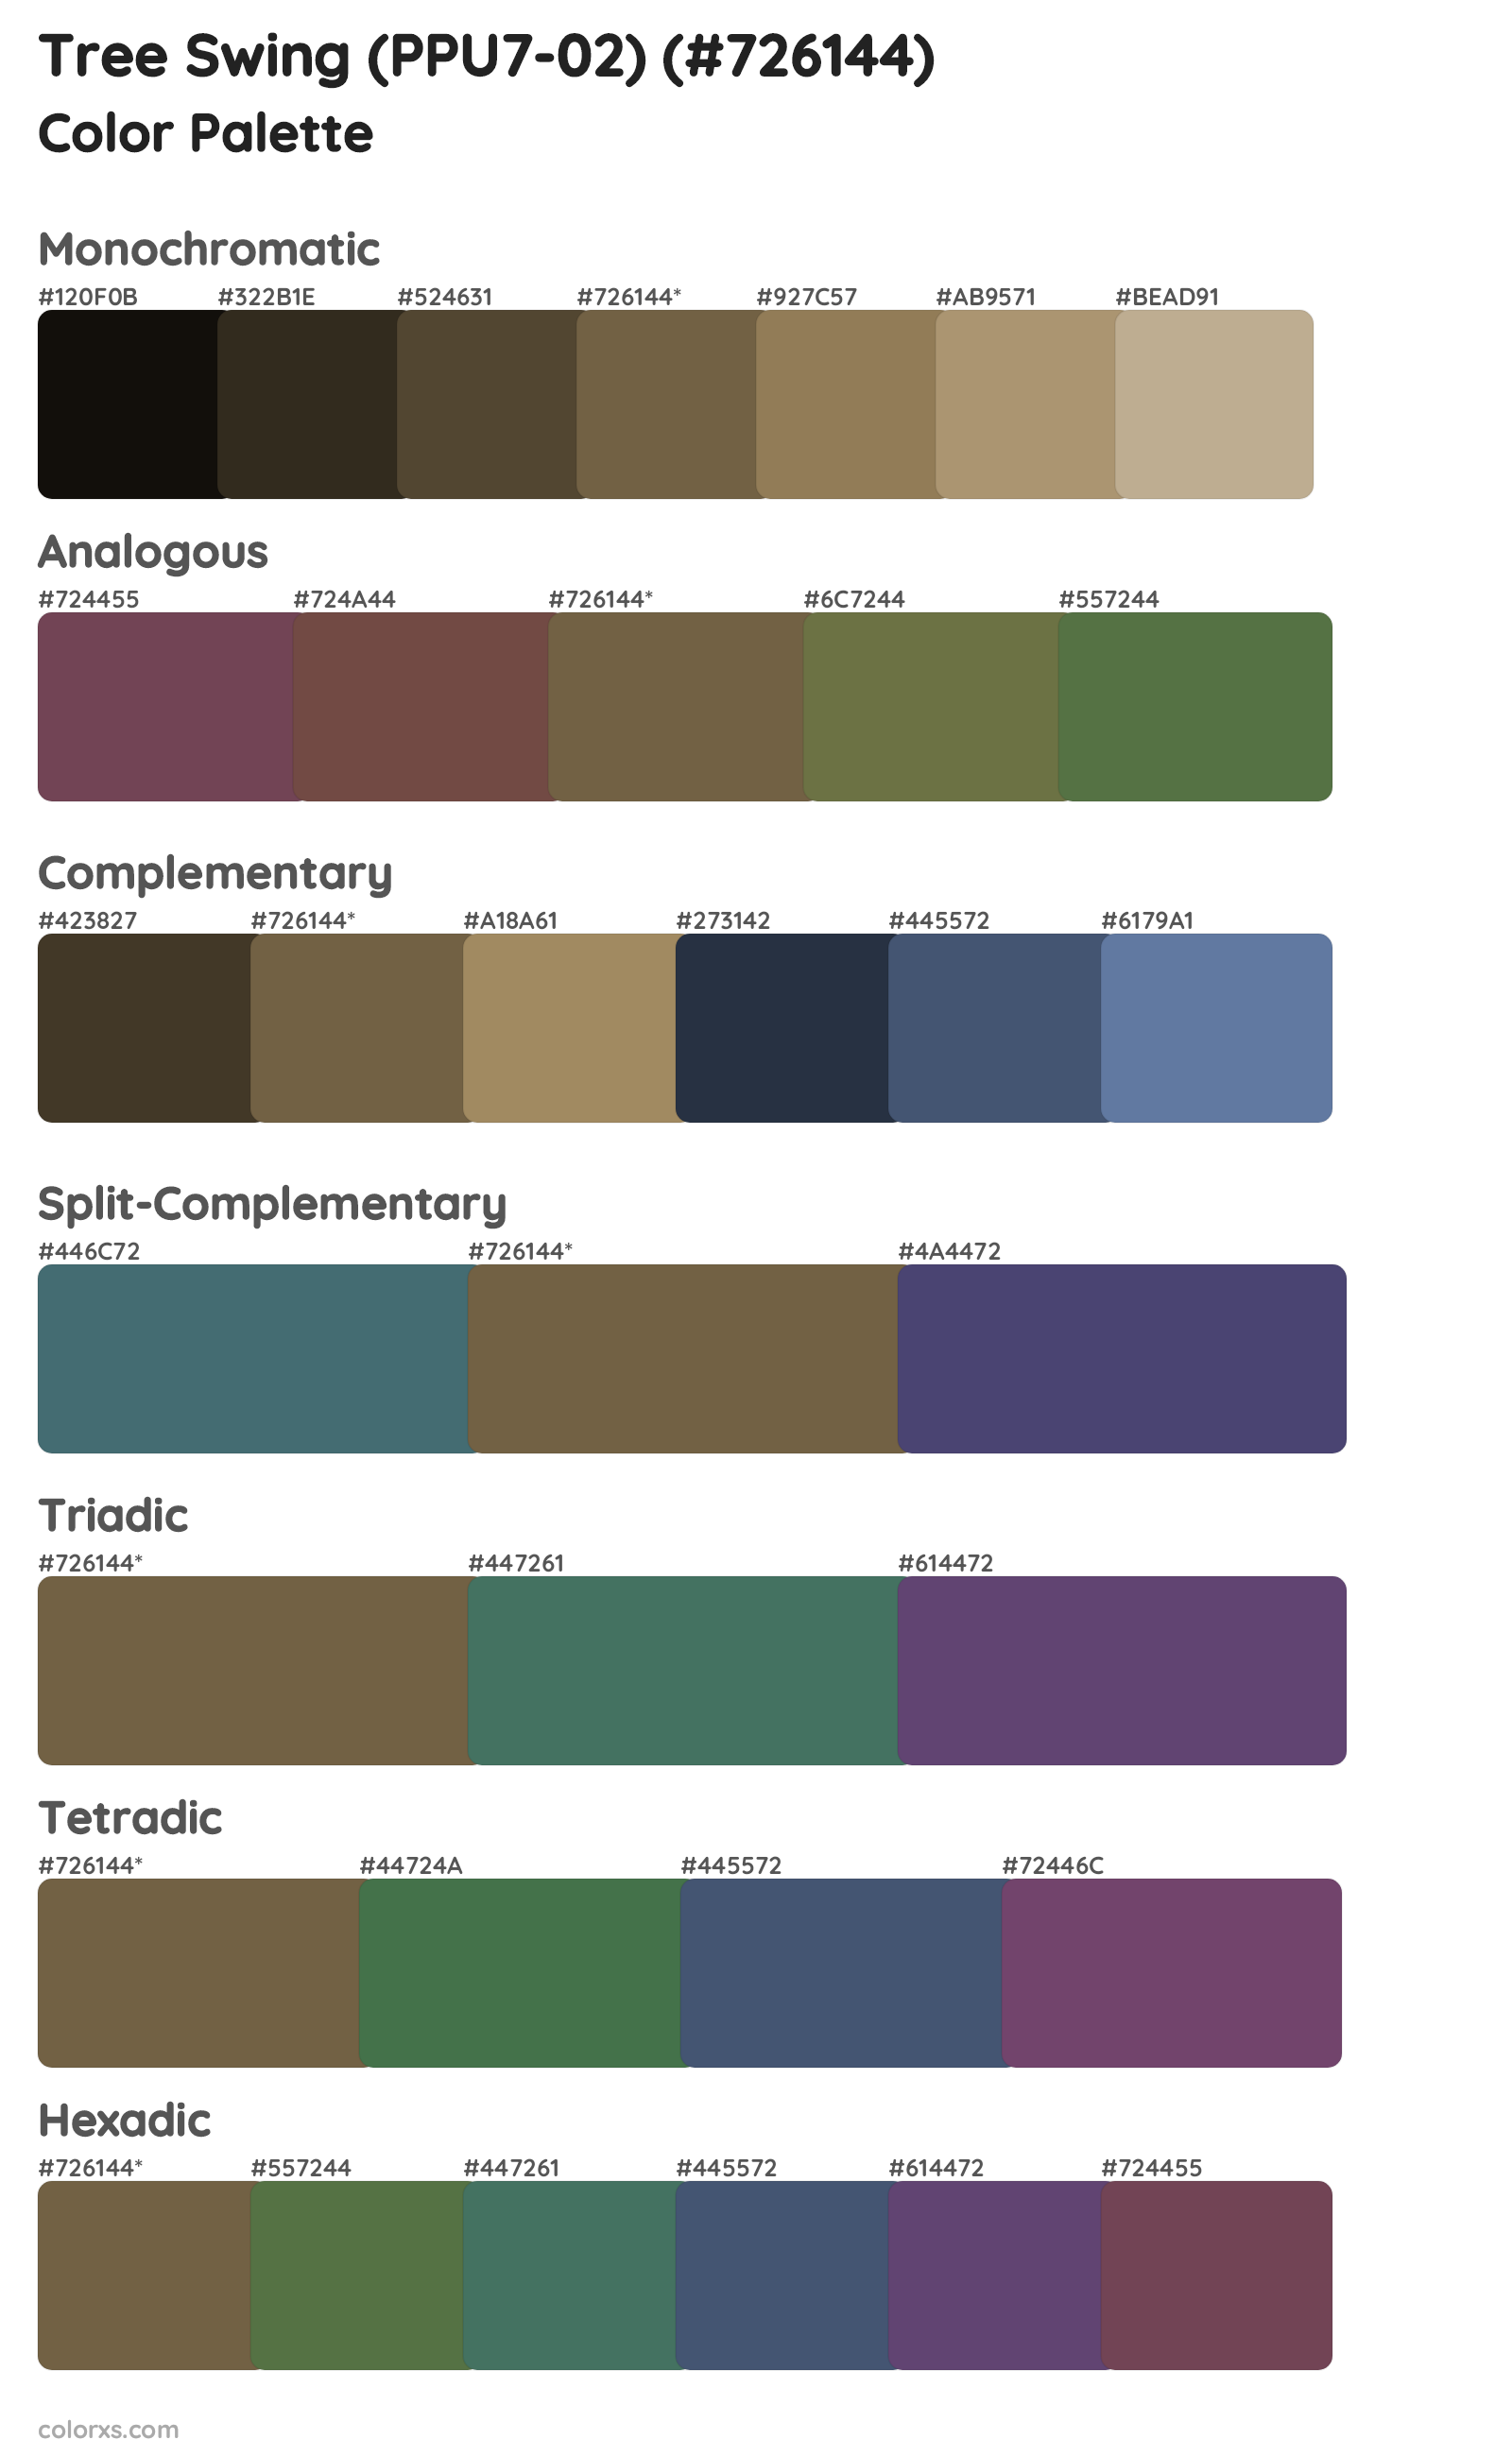 Tree Swing (PPU7-02) Color Scheme Palettes